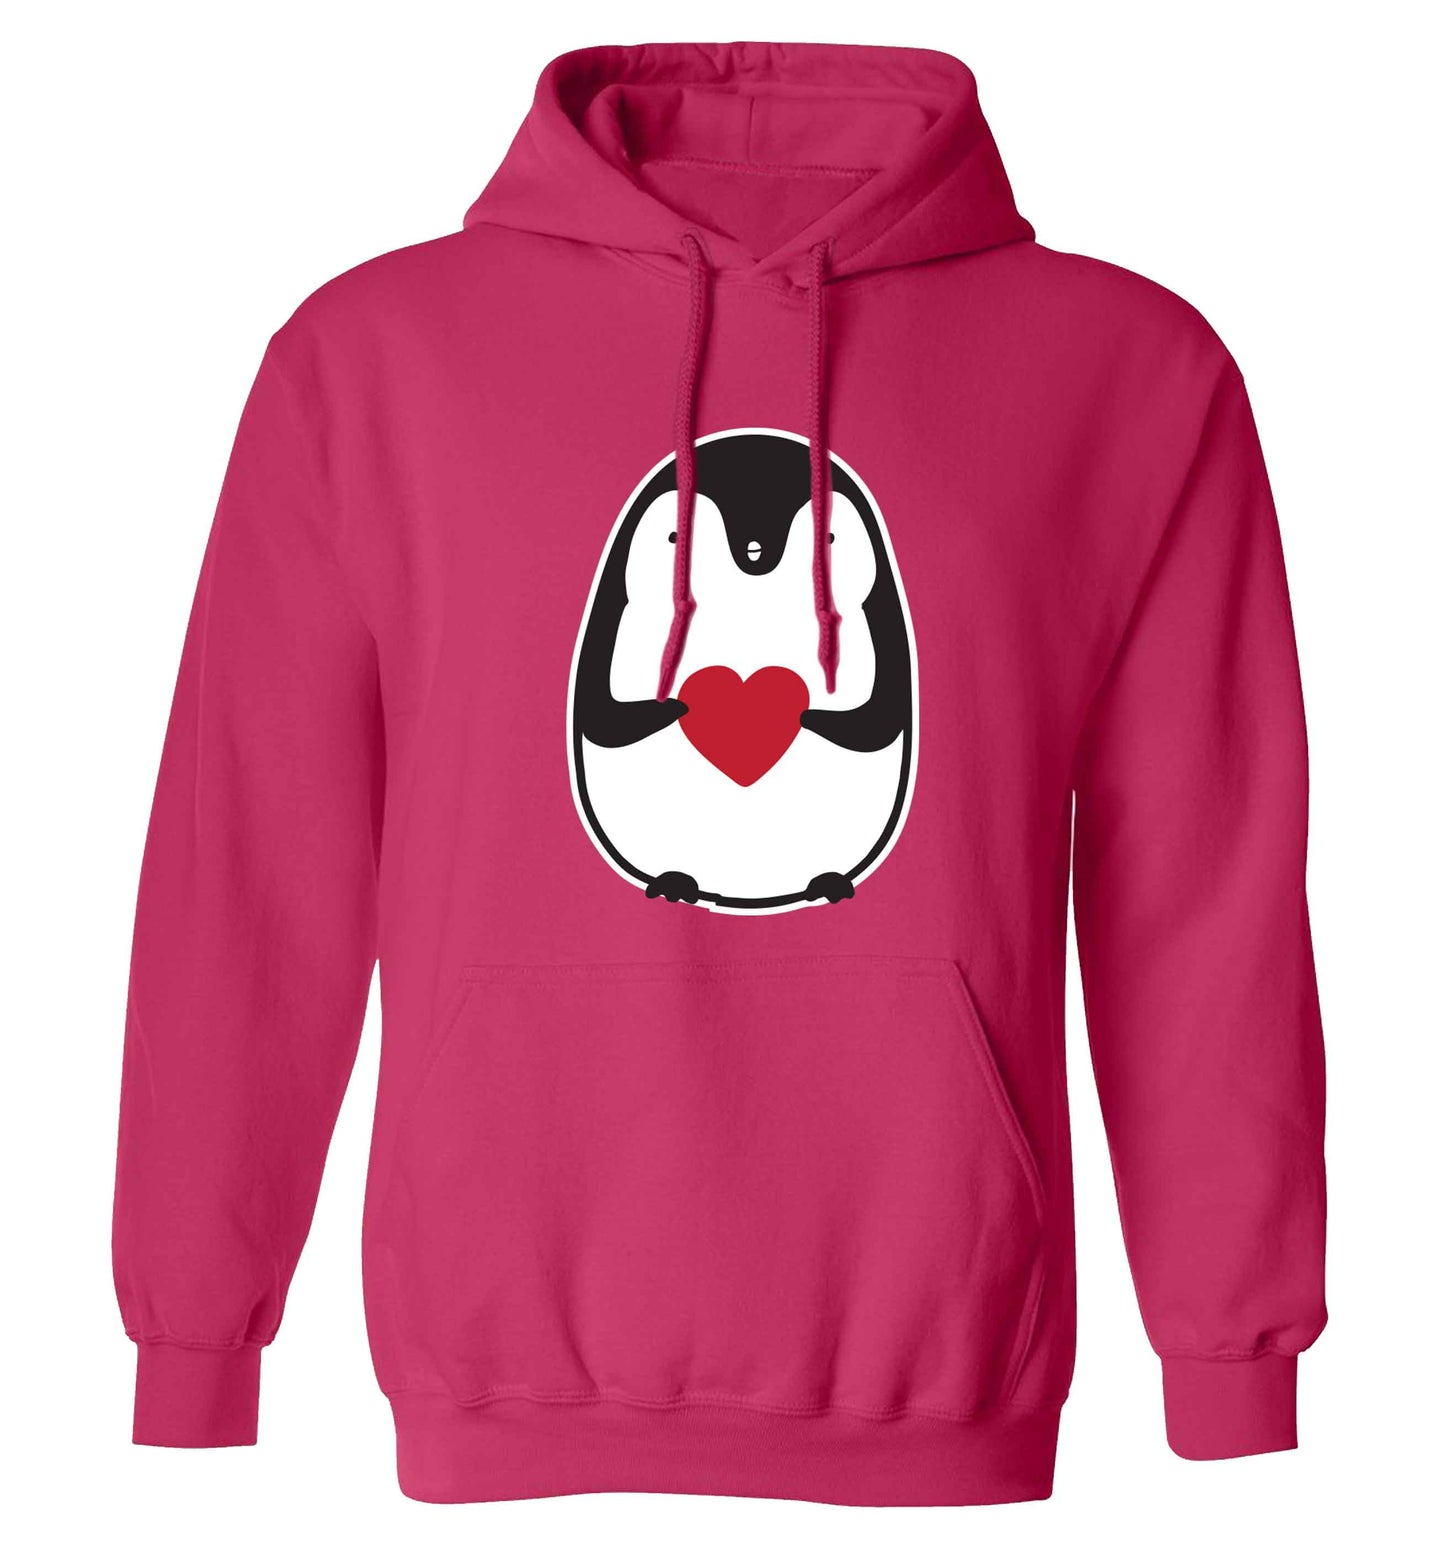 Cute penguin heart adults unisex pink hoodie 2XL